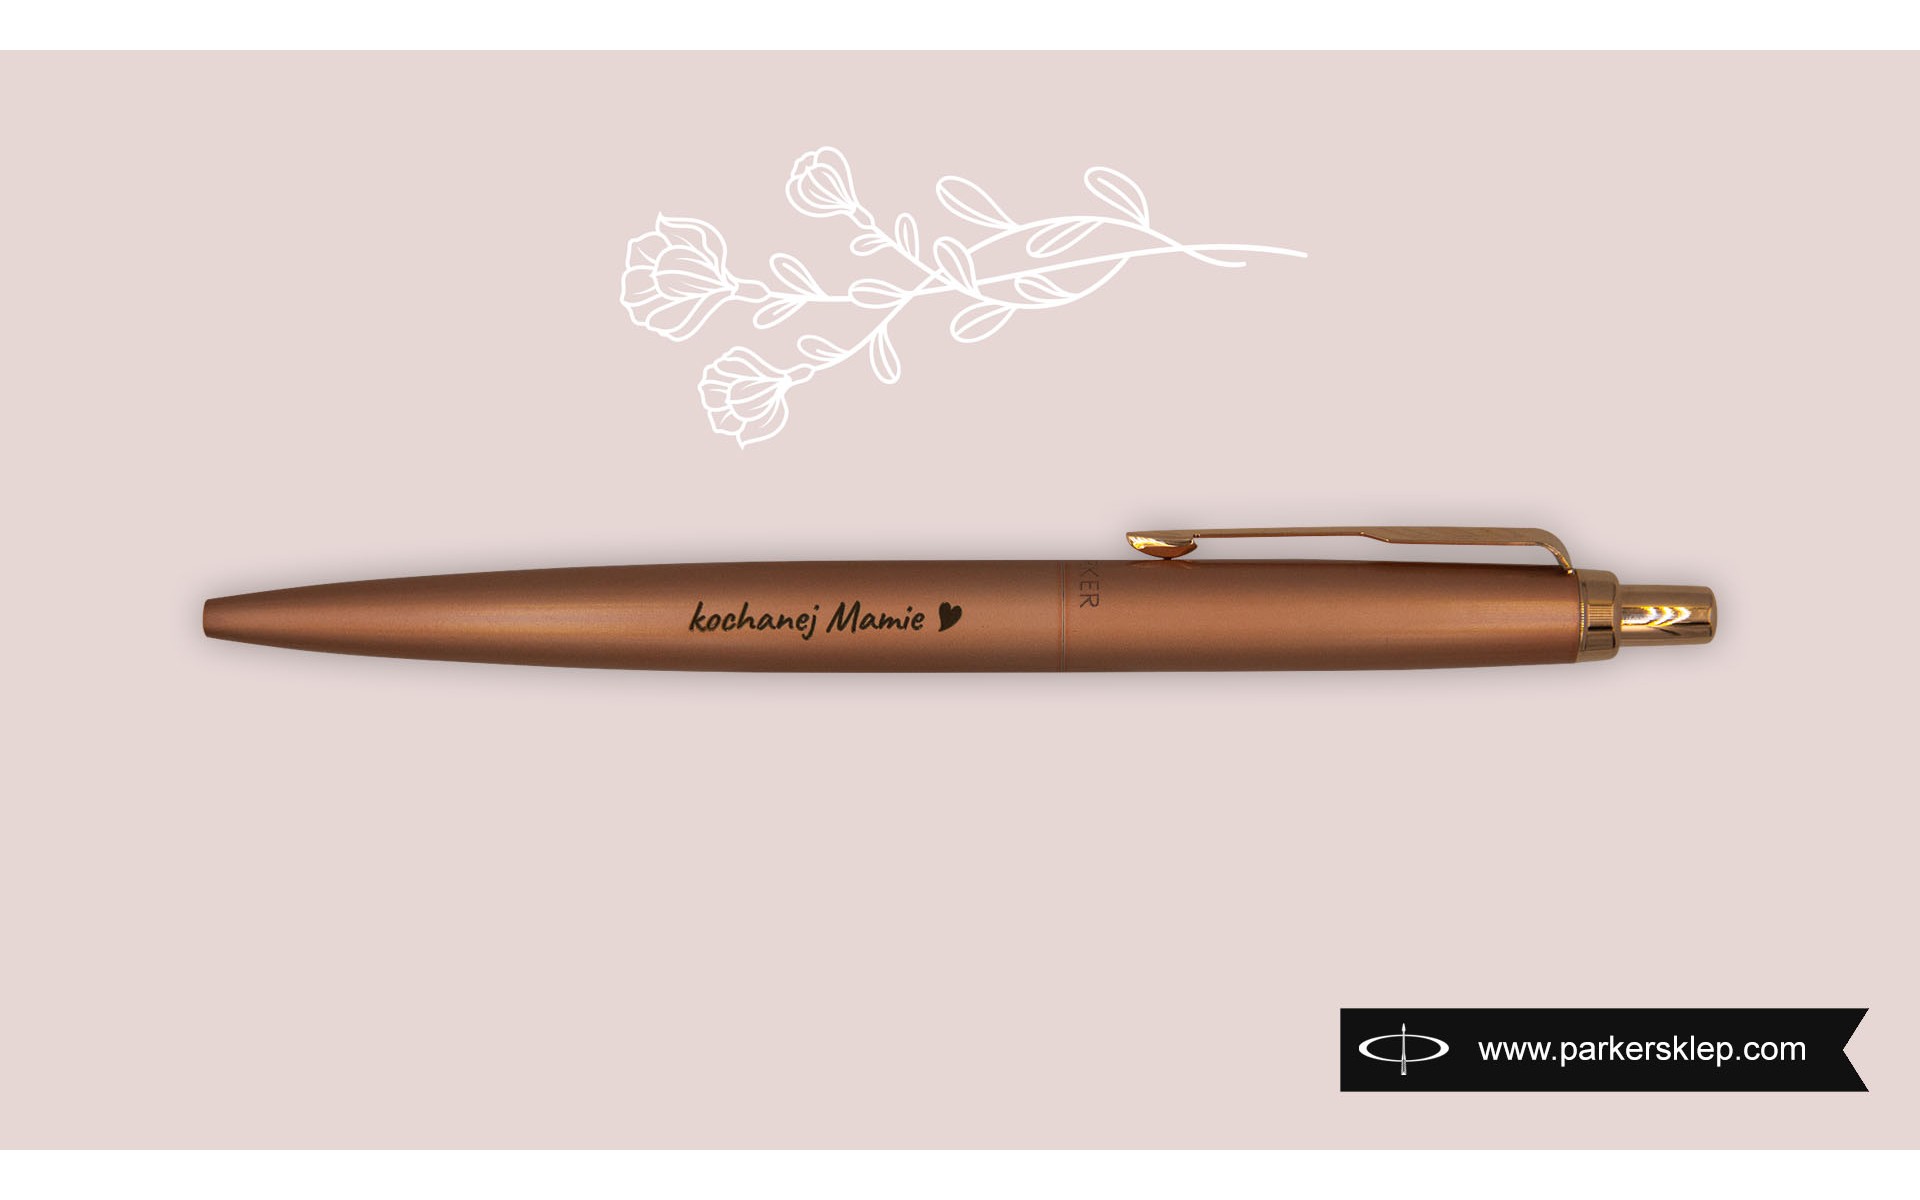  Długopis Parker Jotter XL Monochrome Pink Gold [2122755] z grawerem dla mamy